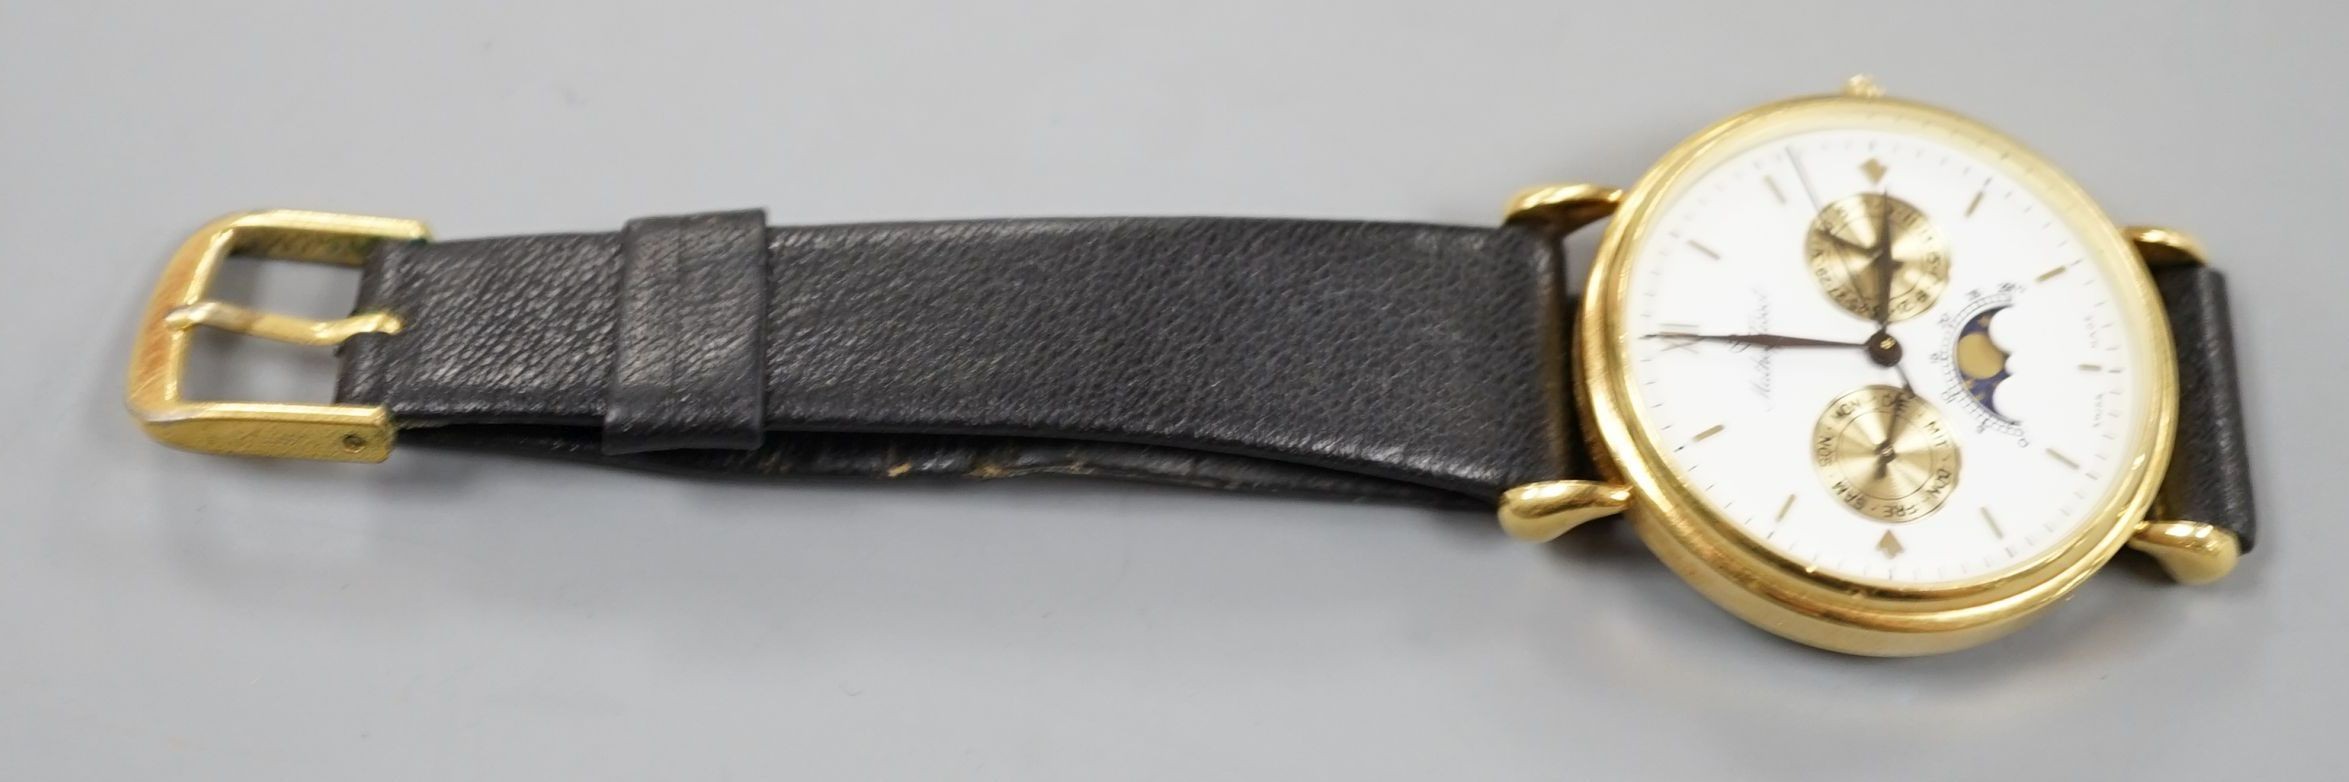 A modern 18k Mathey-Tissot calendar moonphase quartz wrist watch, on a black leather strap, no box or papers.